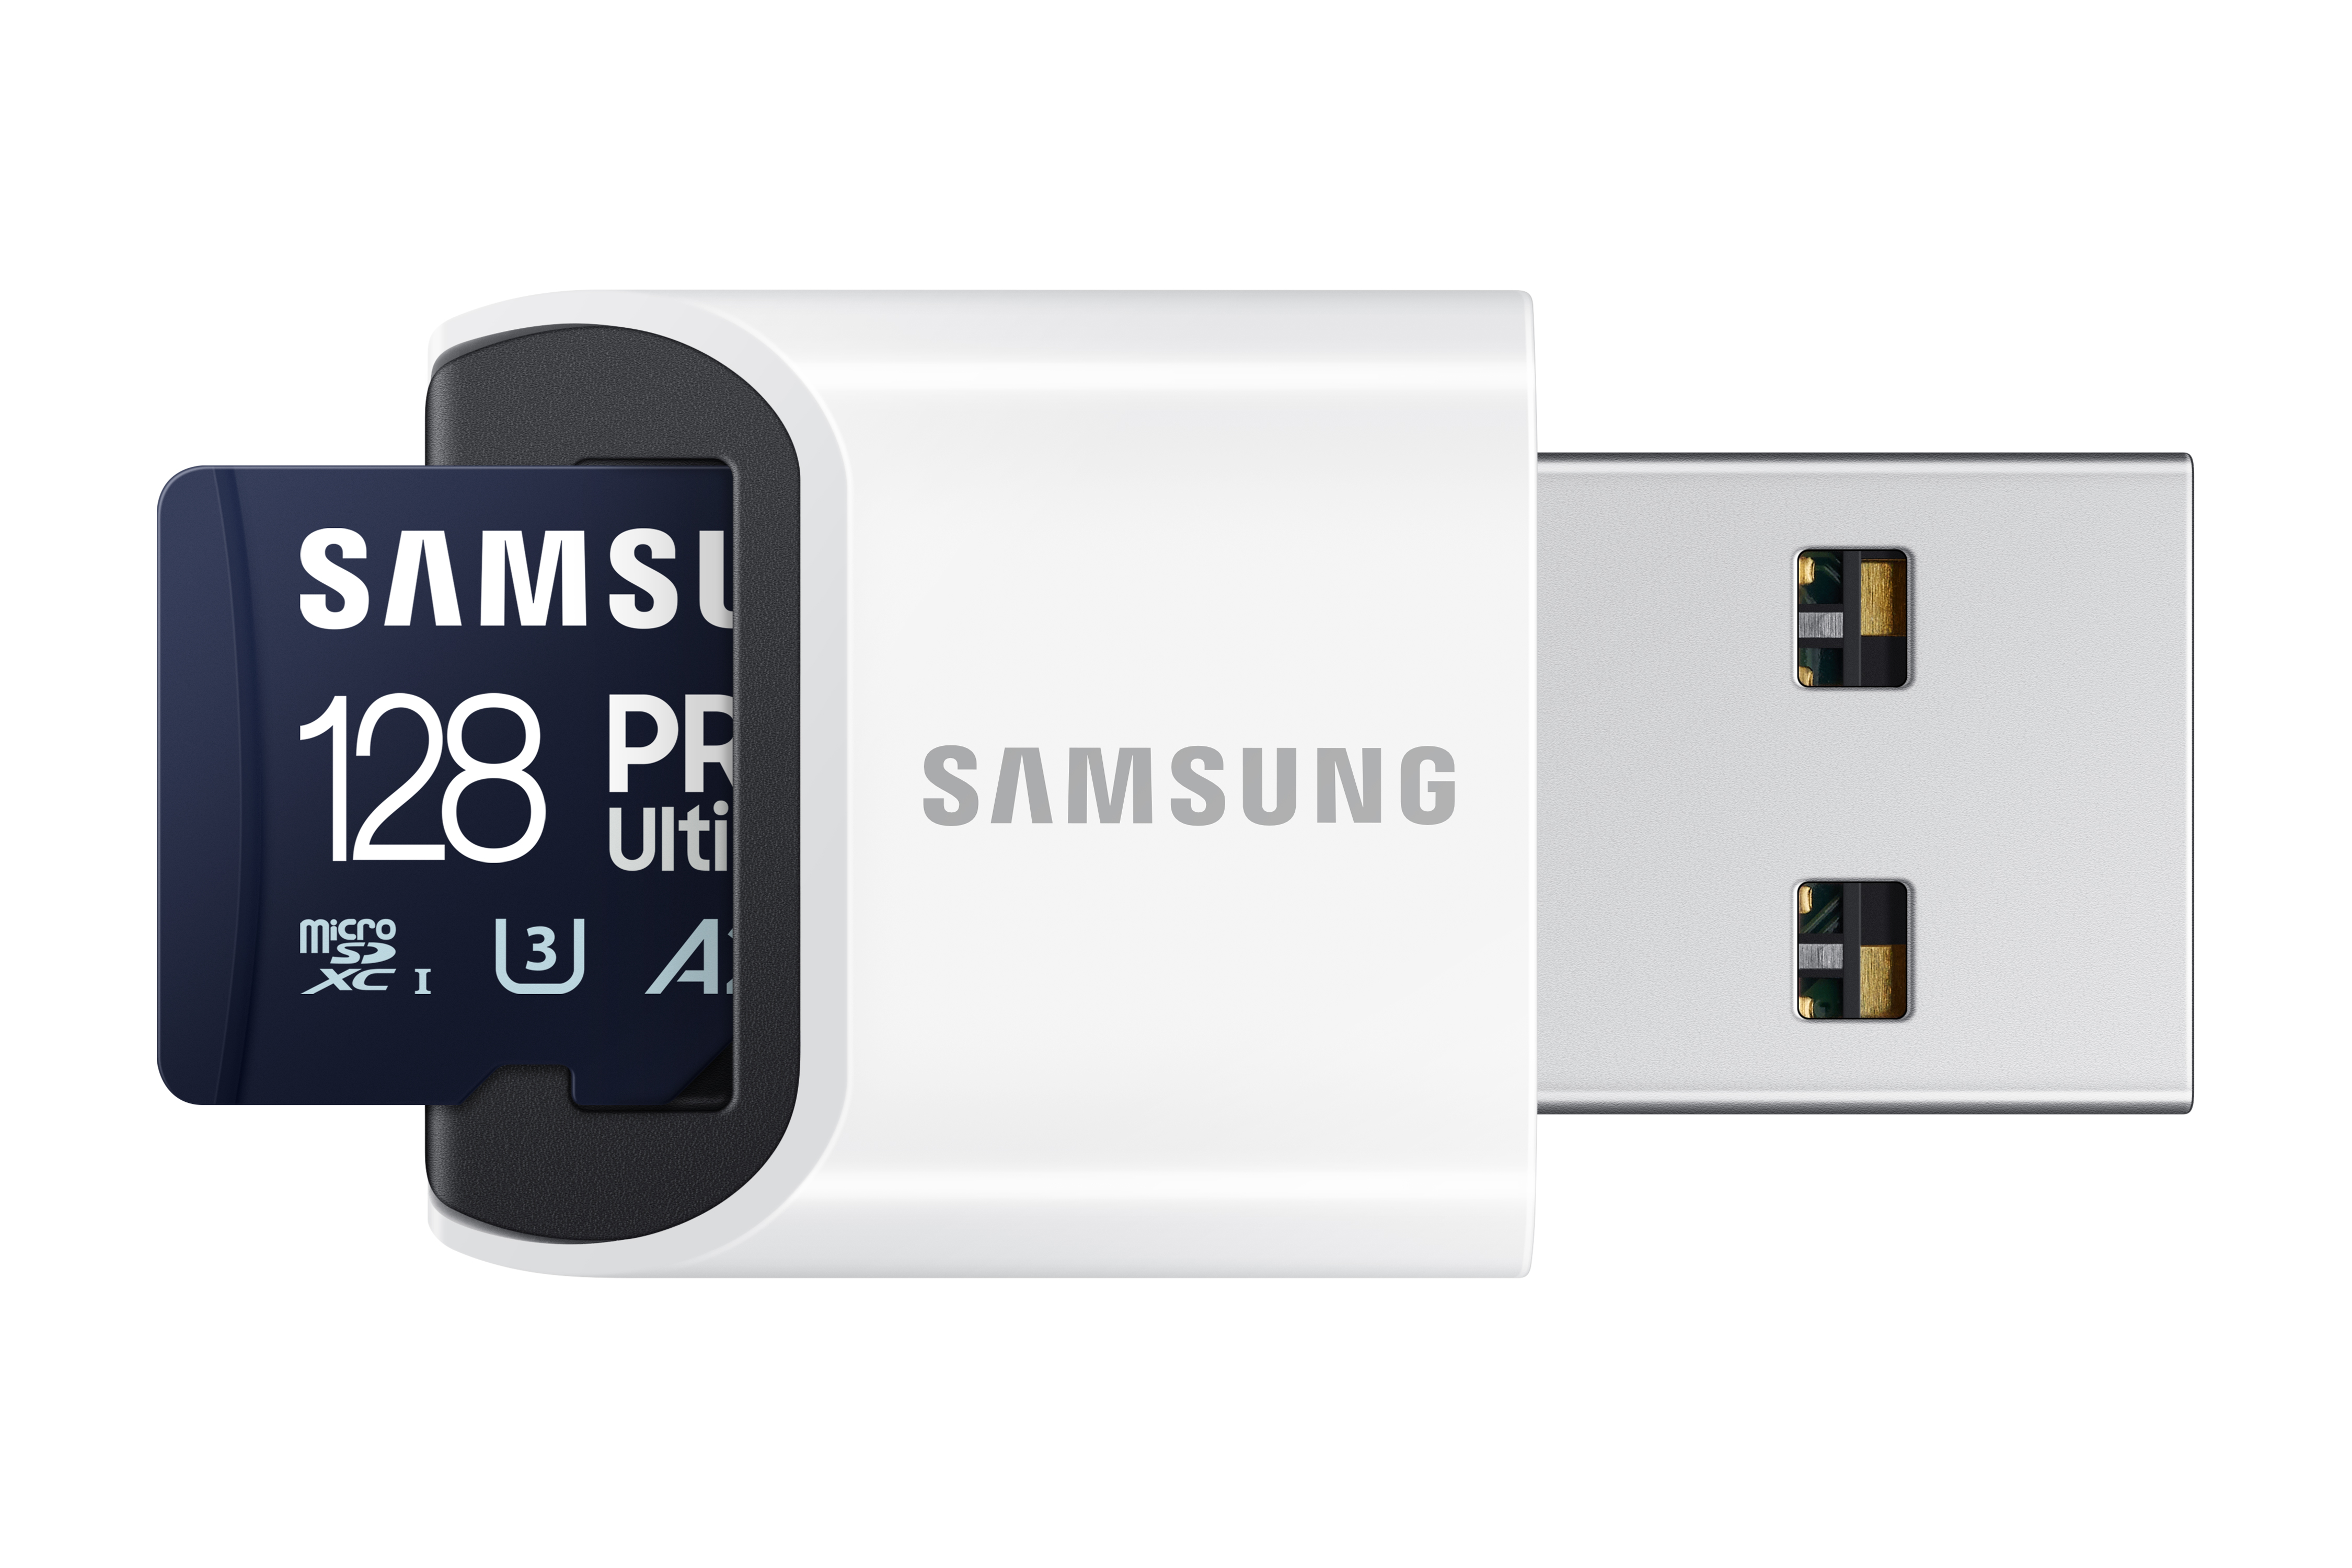 Samsung PRO Ultimate/ micro SDXC/ 128GB/ 200MBps/ UHS-I U3 / Class 10/ + Adaptér/ Modrá 